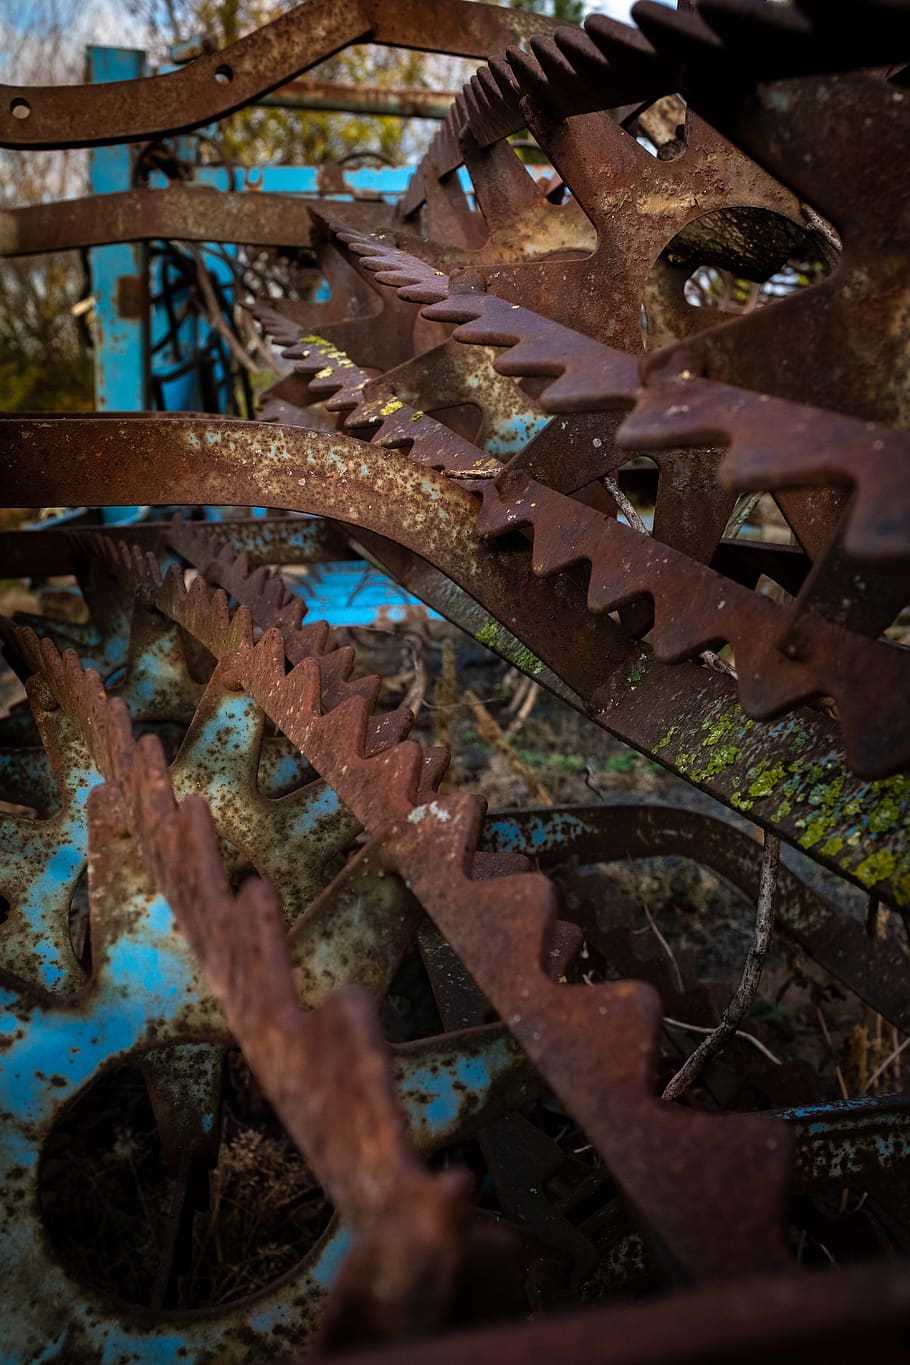 rust, wheels, wheel, old, metal, rusty, broken, decay, gear, vintage